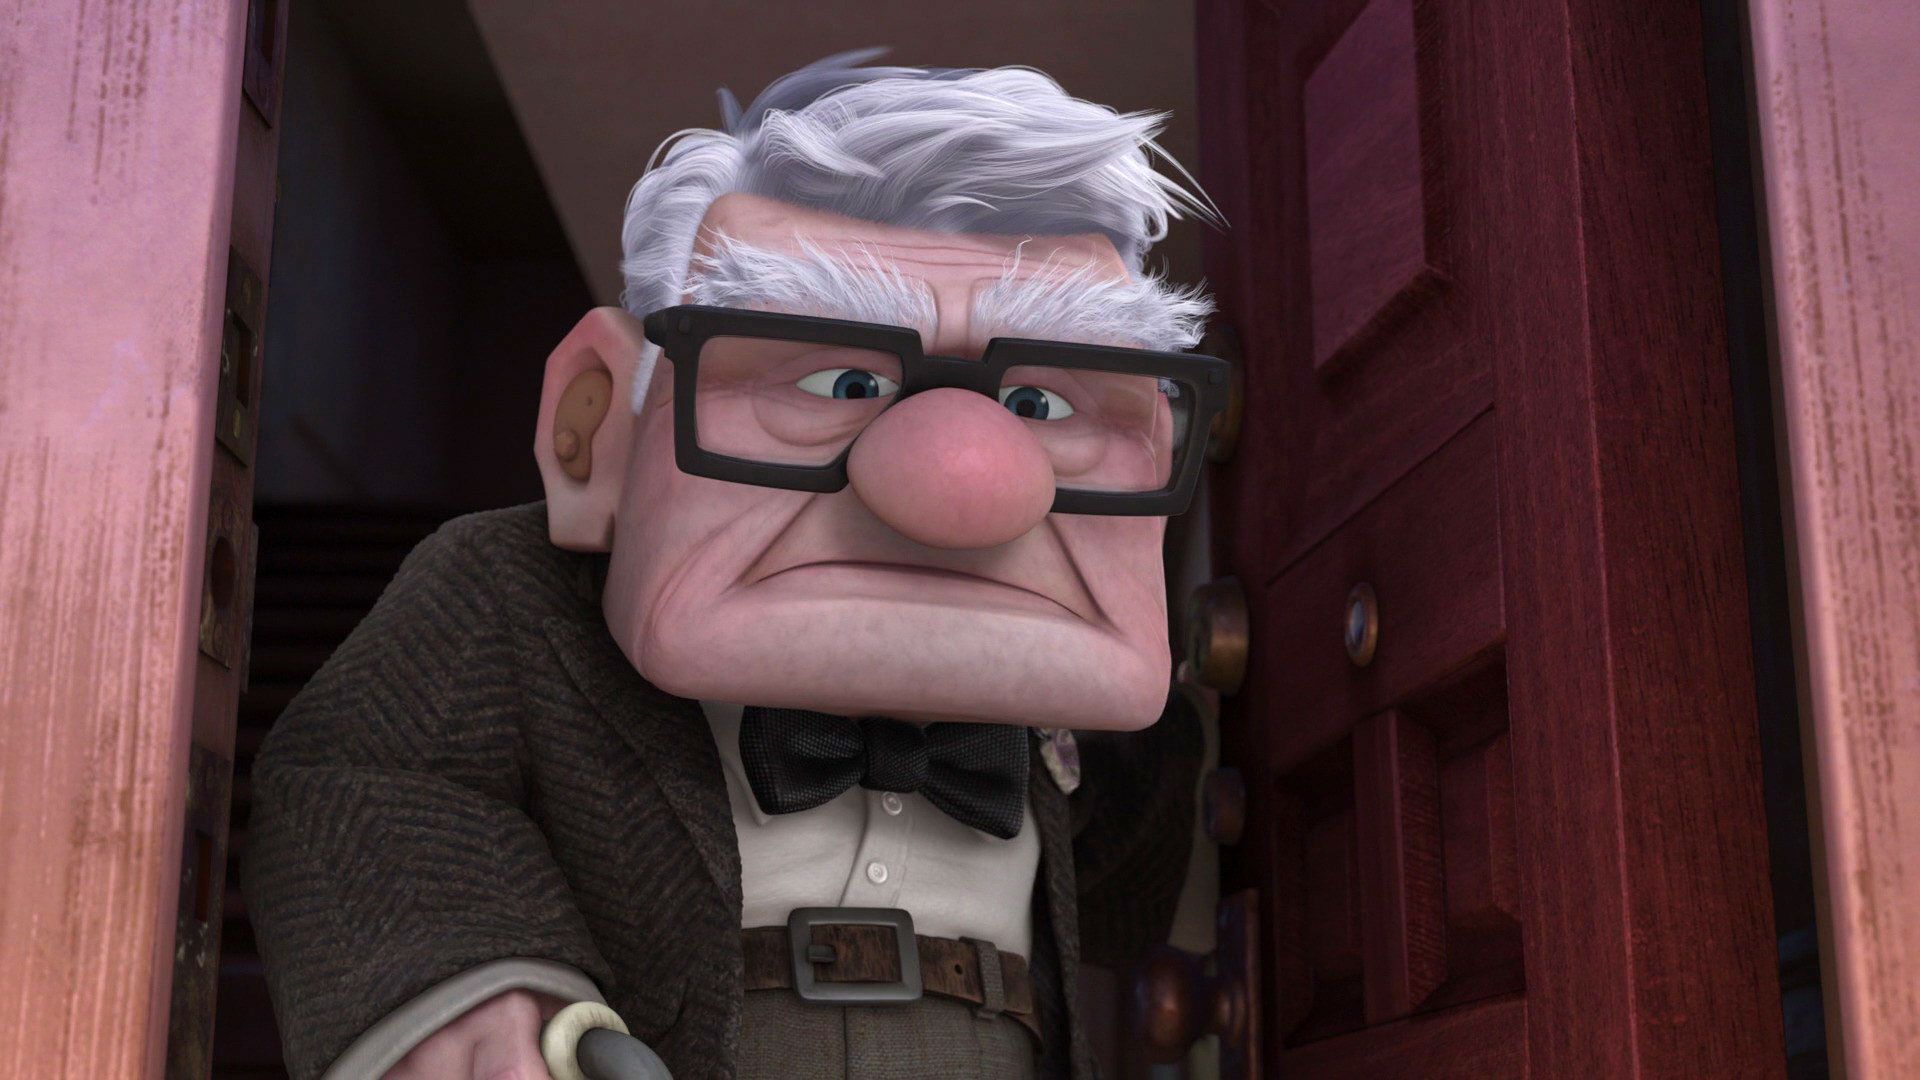 old man cartoon character disney